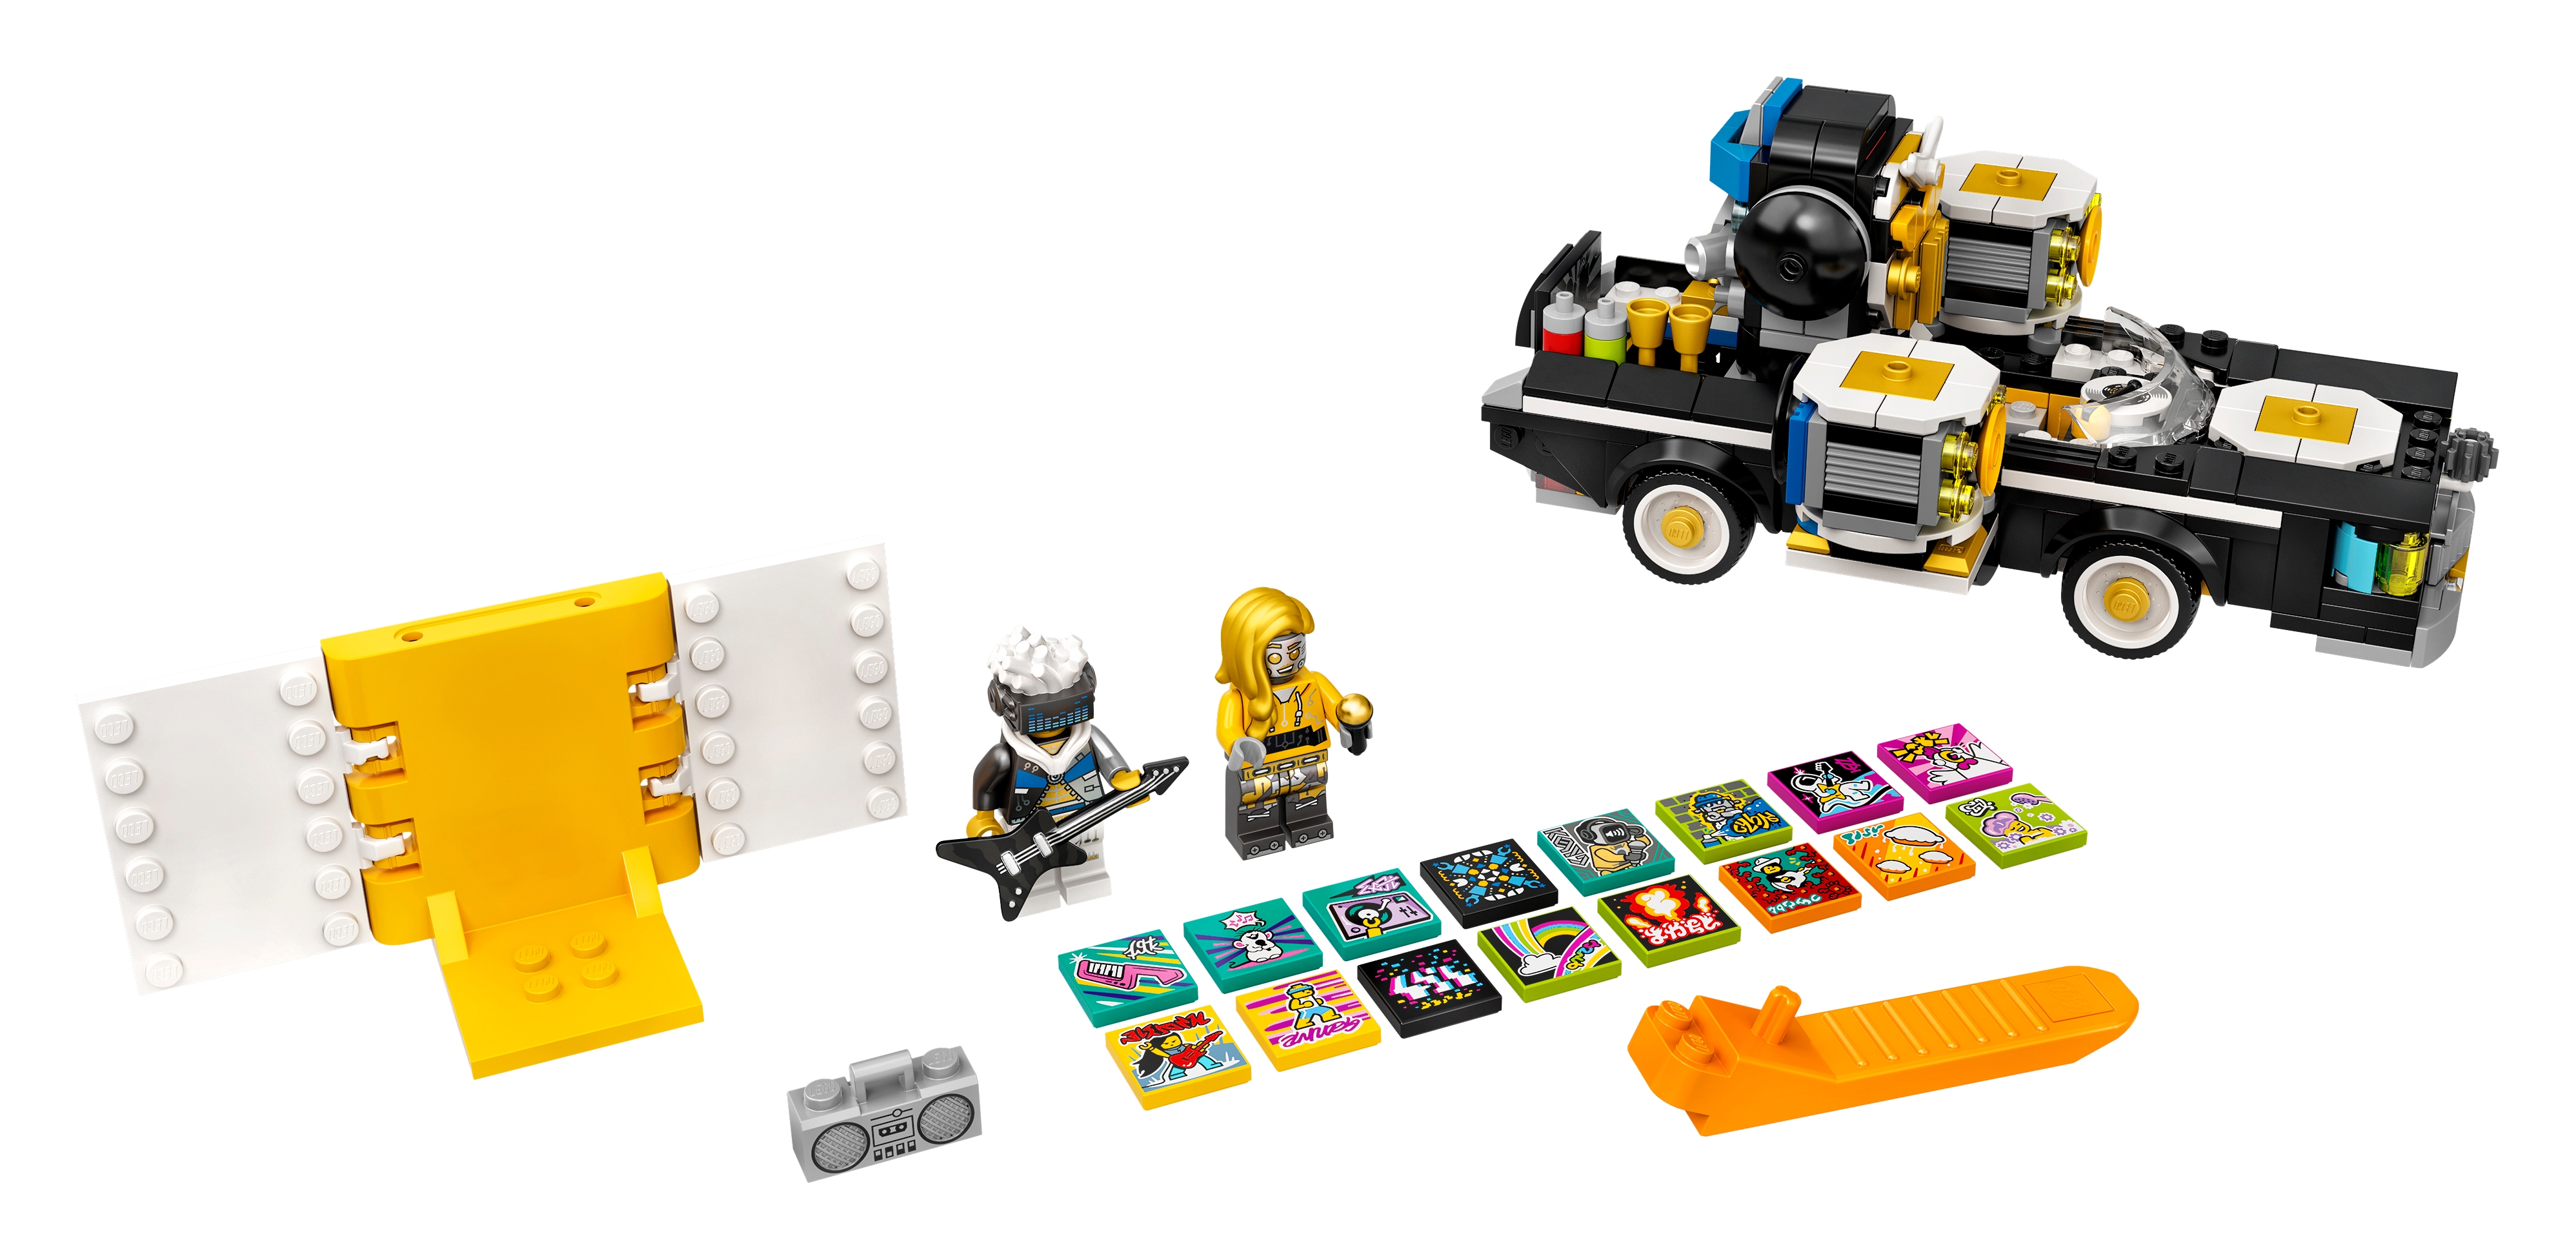 Robo HipHop Car 43112 | VIDIYO™ | Buy online at the Official LEGO® Shop US